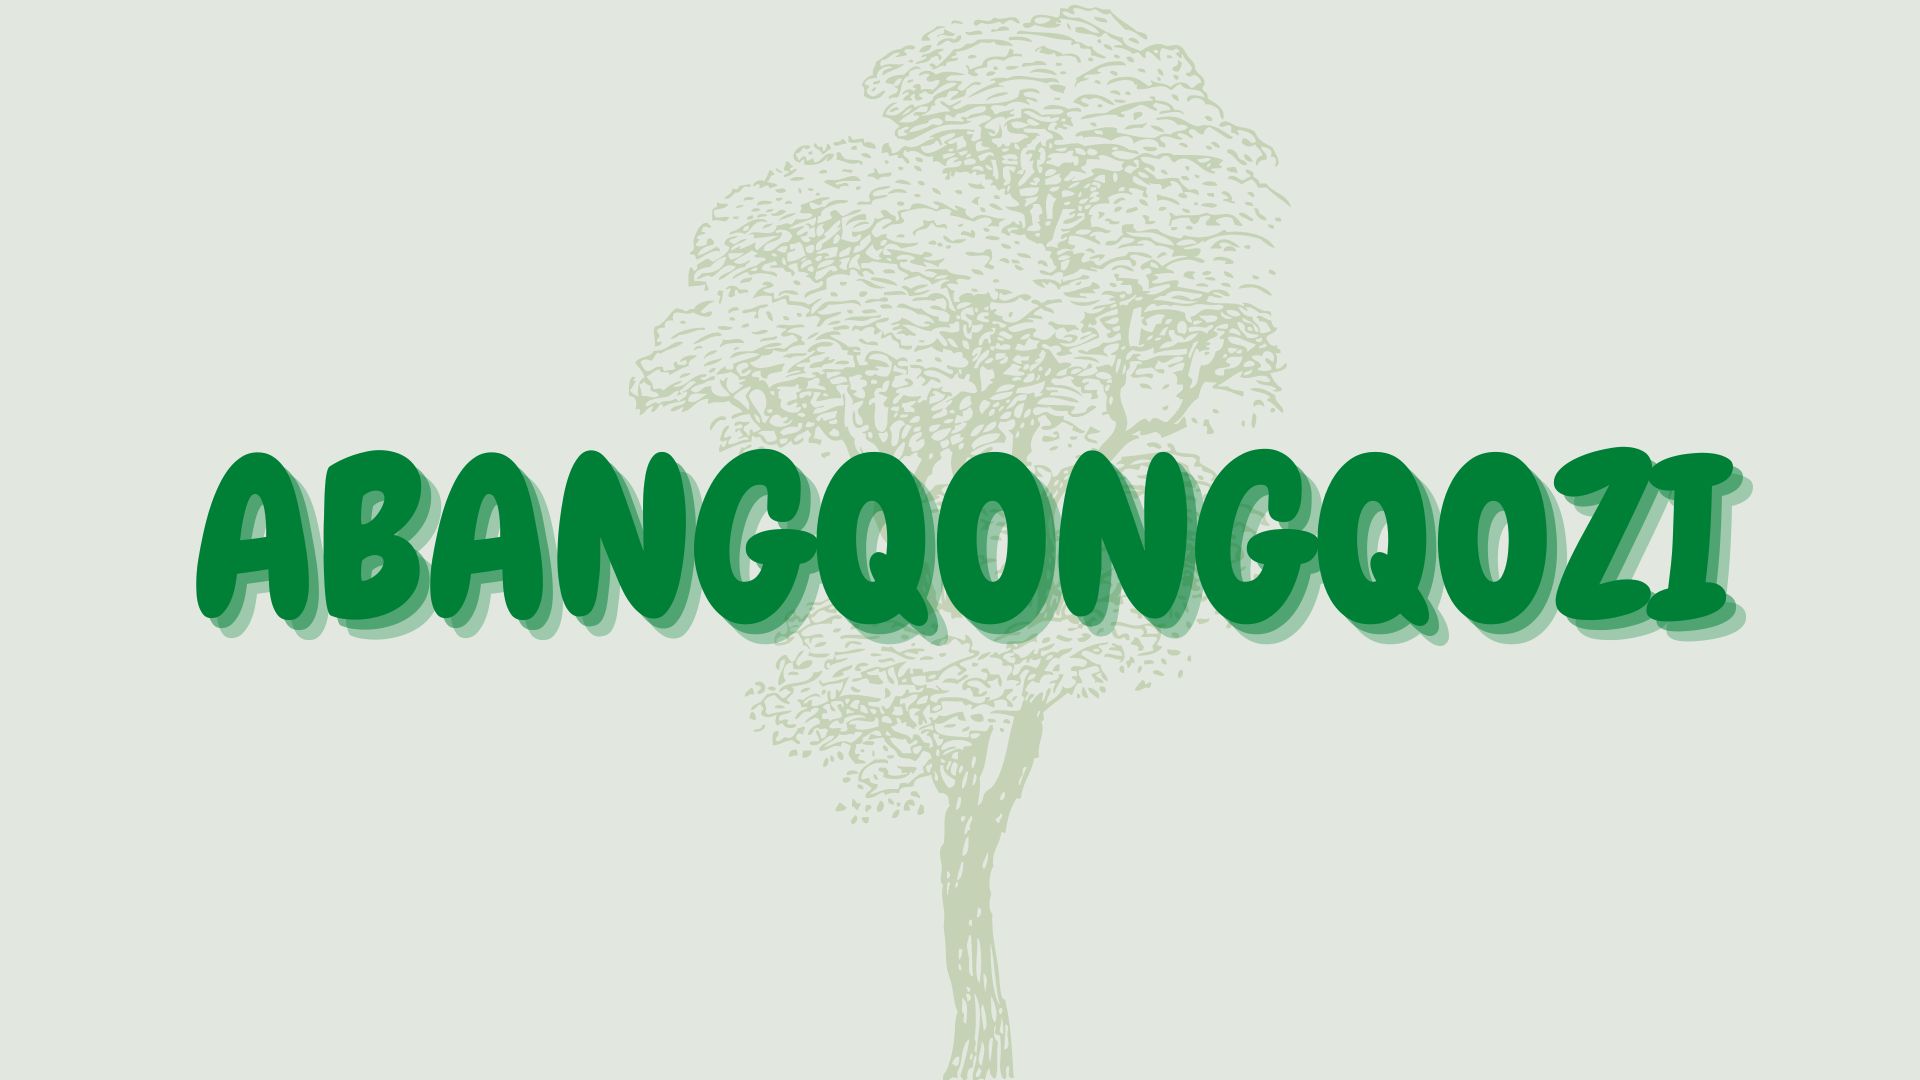 You are currently viewing Abangqongqozi